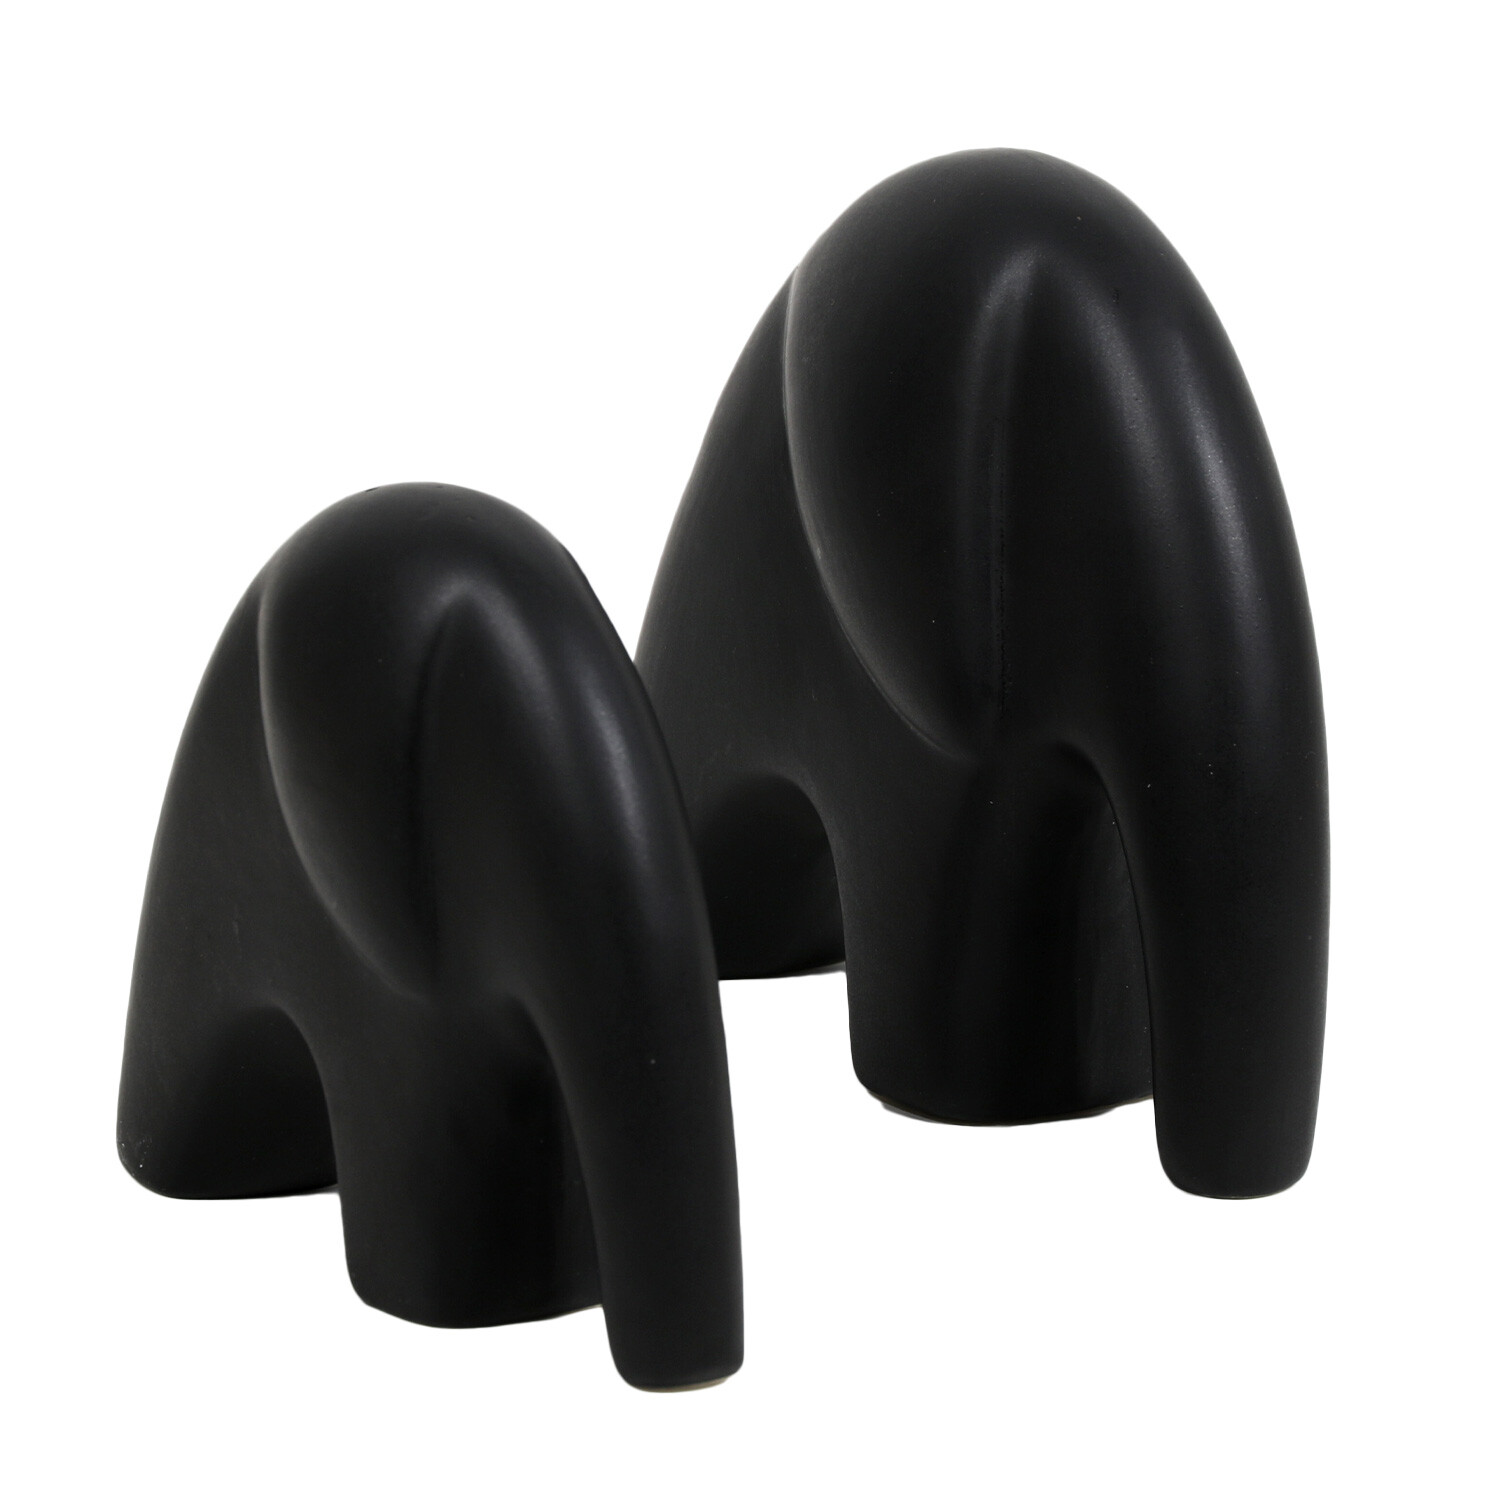 Set of 2 Elephant Ornaments - Black Image 2